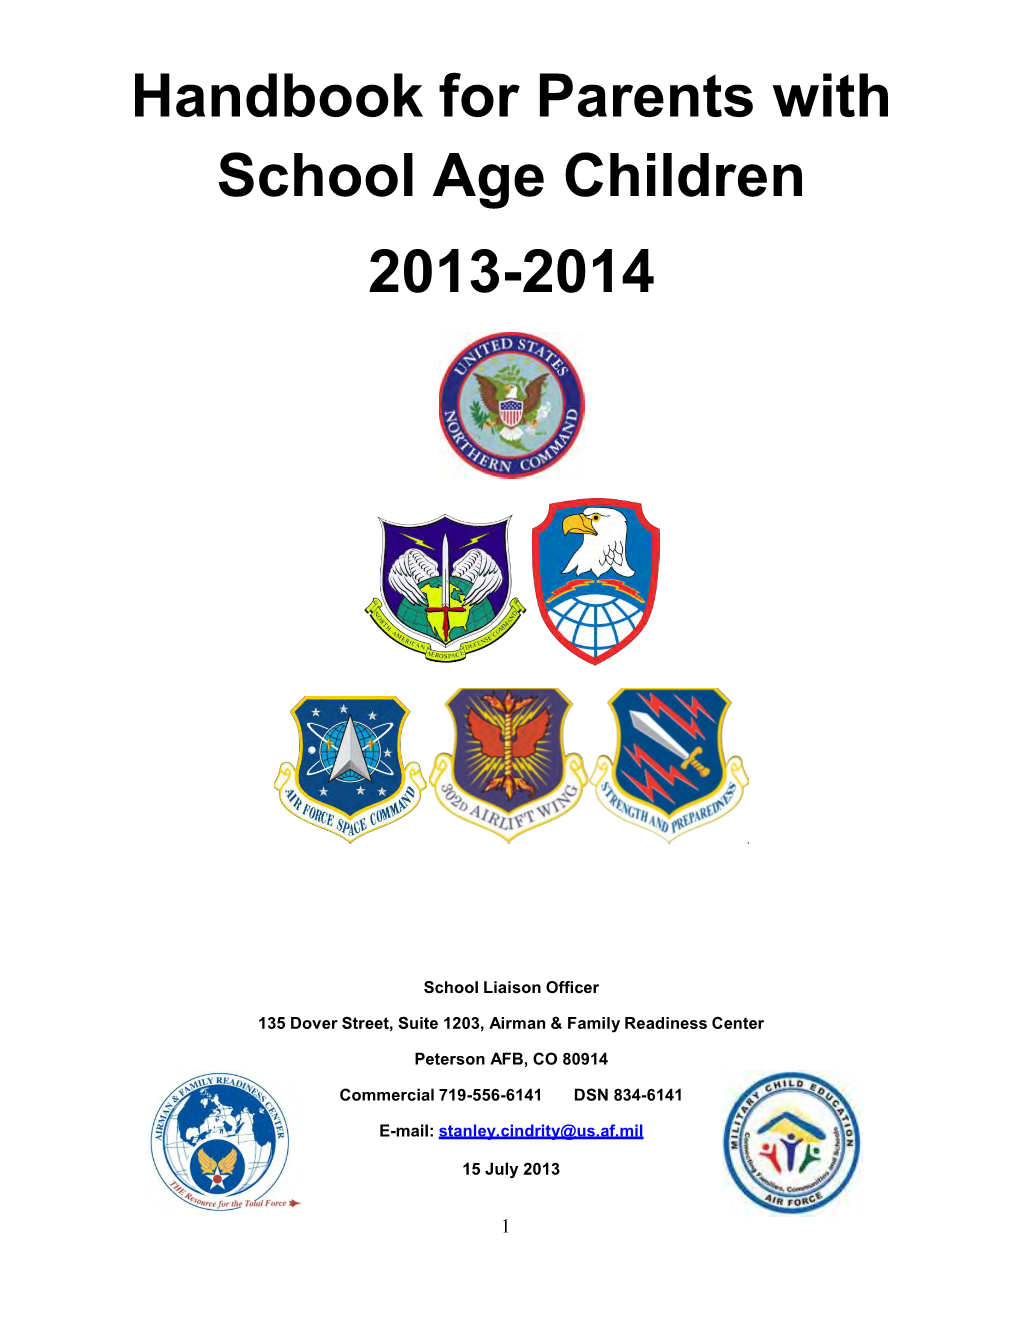 Handbook for Parents with School Age Children 2013-2014